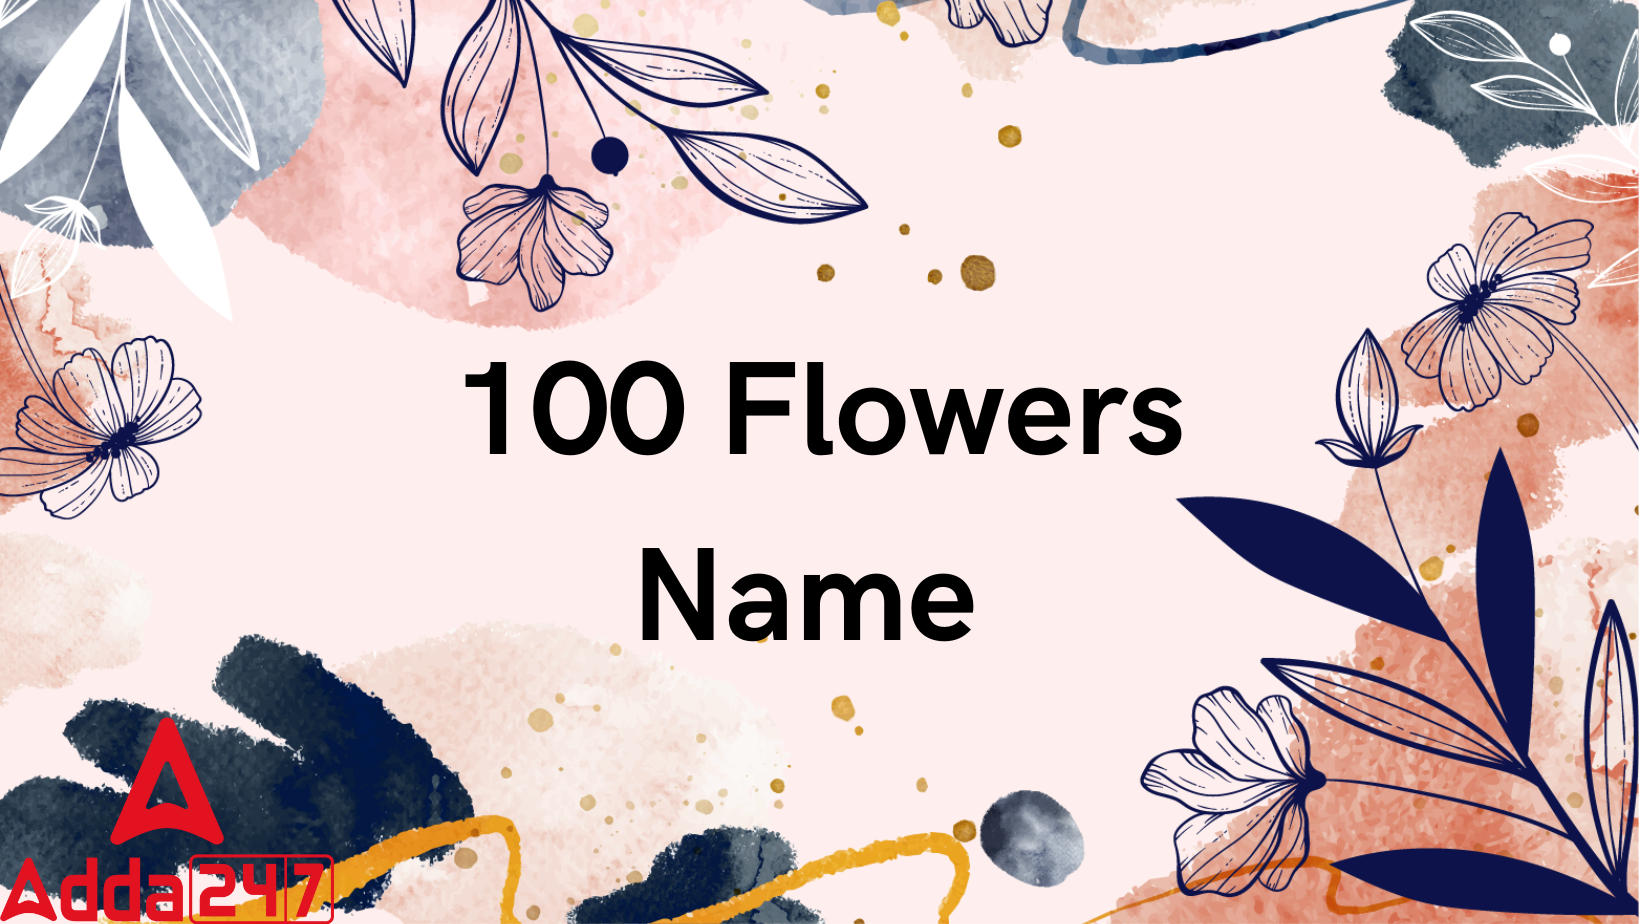 100 Flowers Name in English & Hindi PDF